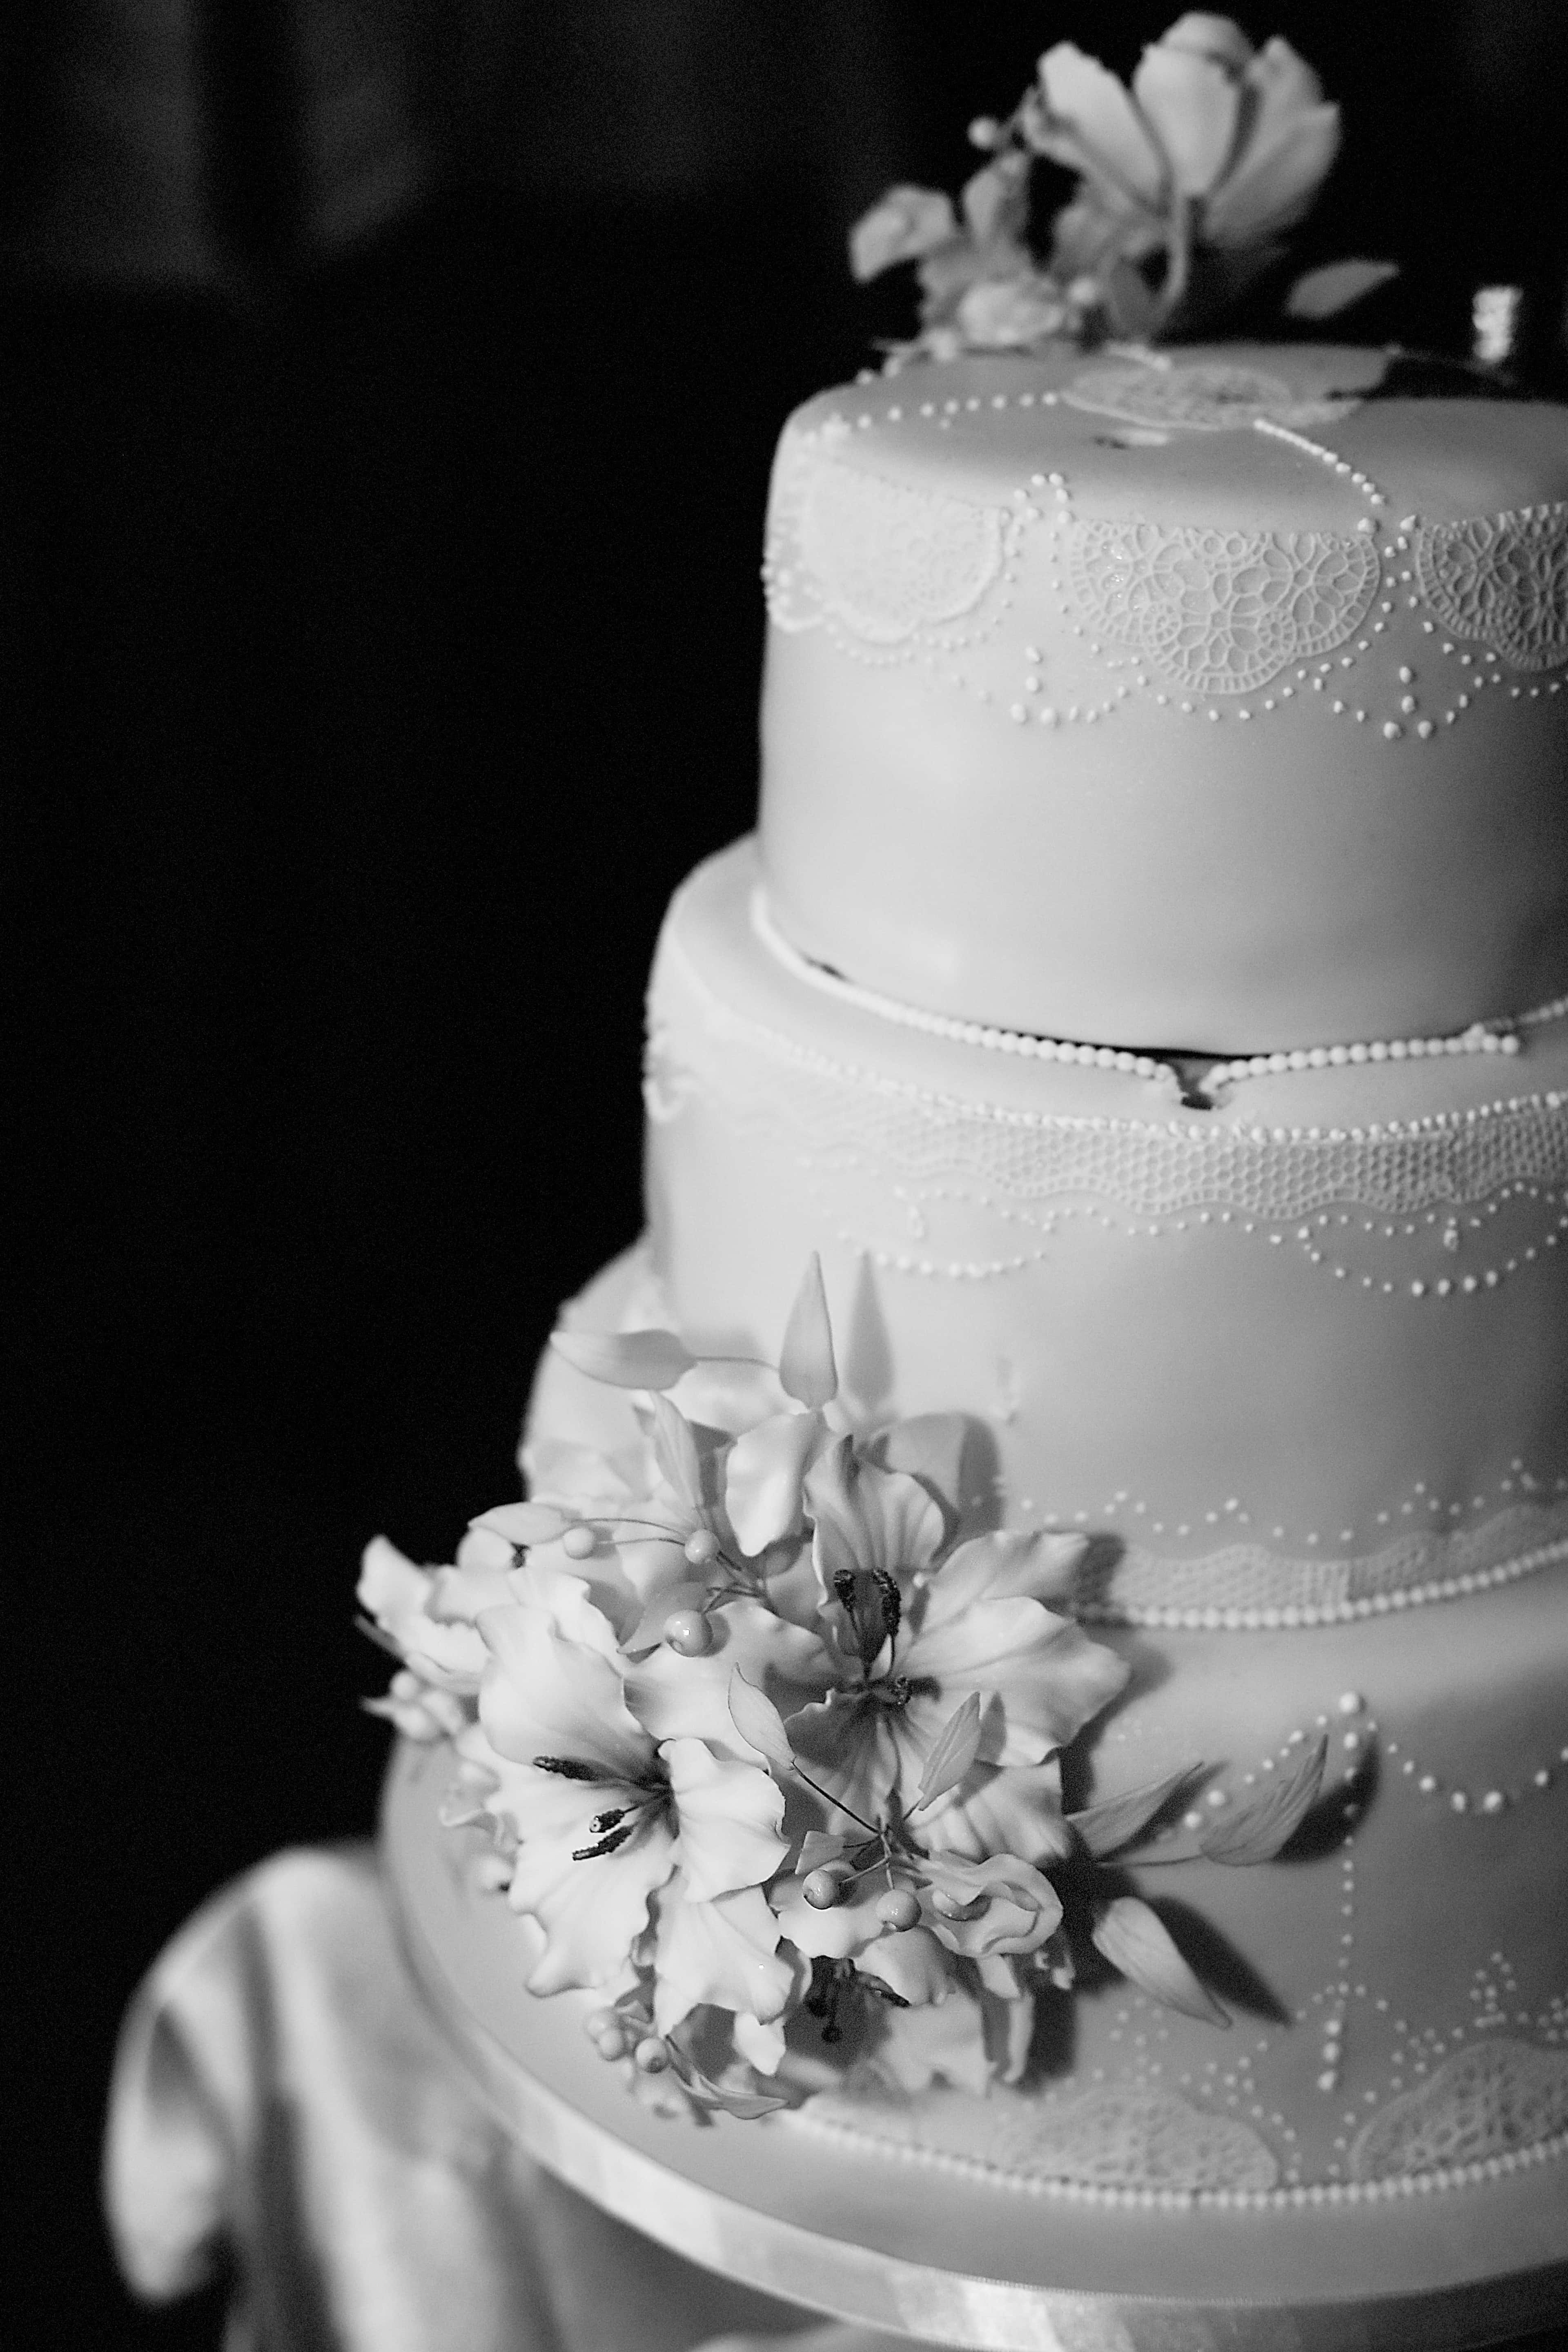 Imagen gratis: pastel de boda, blanco y negro, monocromo, elegancia, boda,  flor, amor, crema, elegante, romance